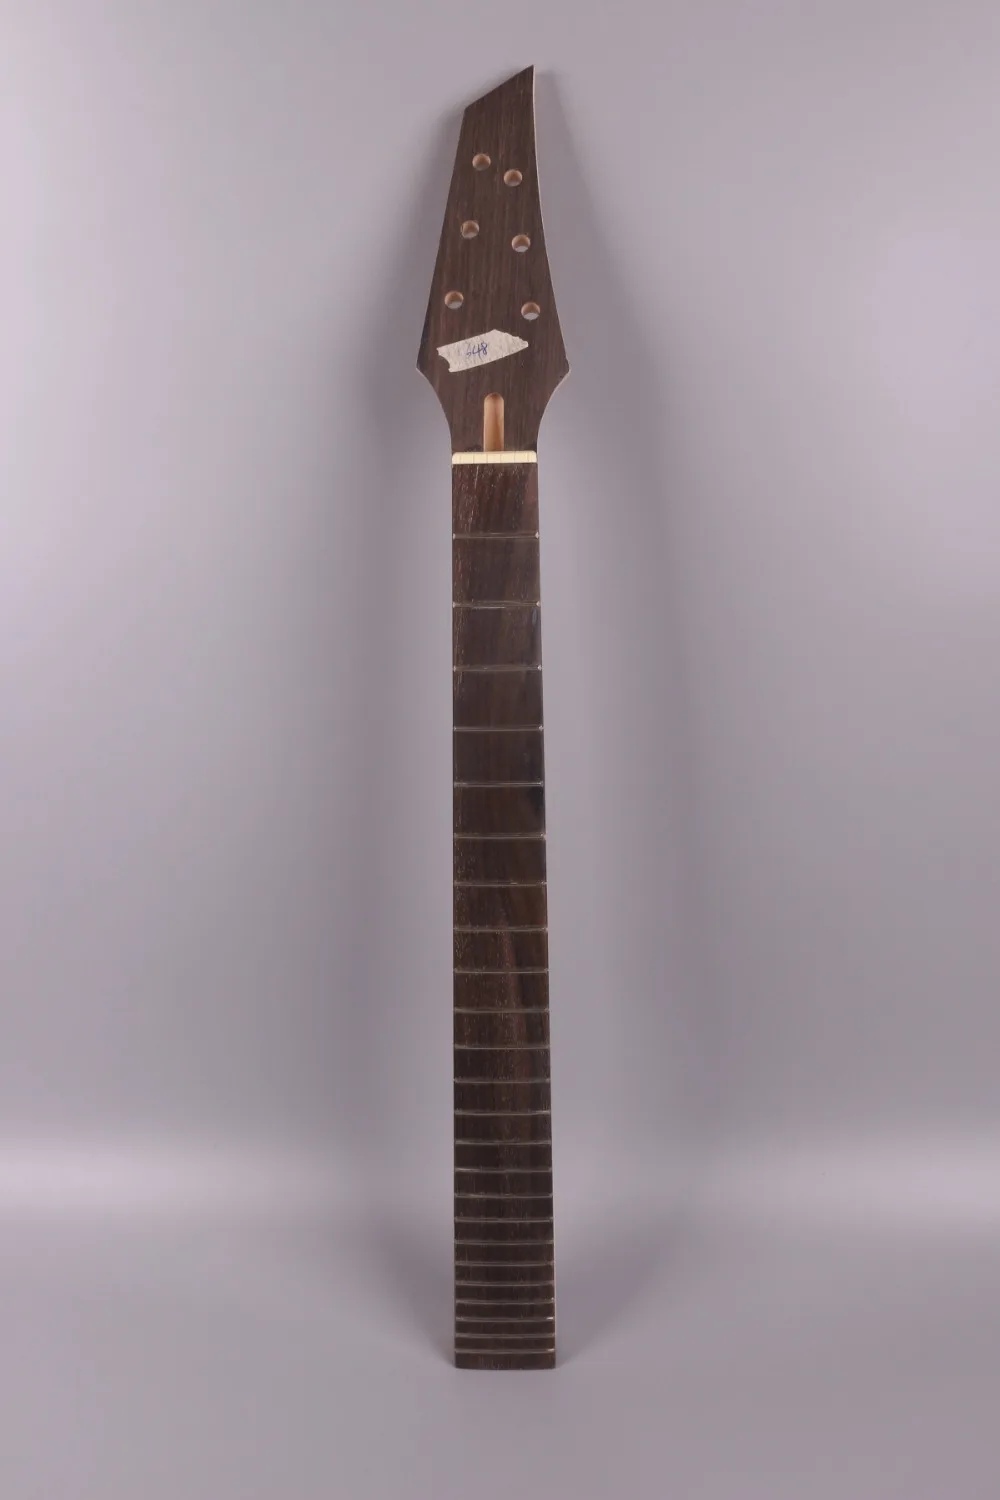 right-hand-electric-guitar-neck-24-fret-255-maple-wood-rosewood-fretboard-locking-nut--jk-025